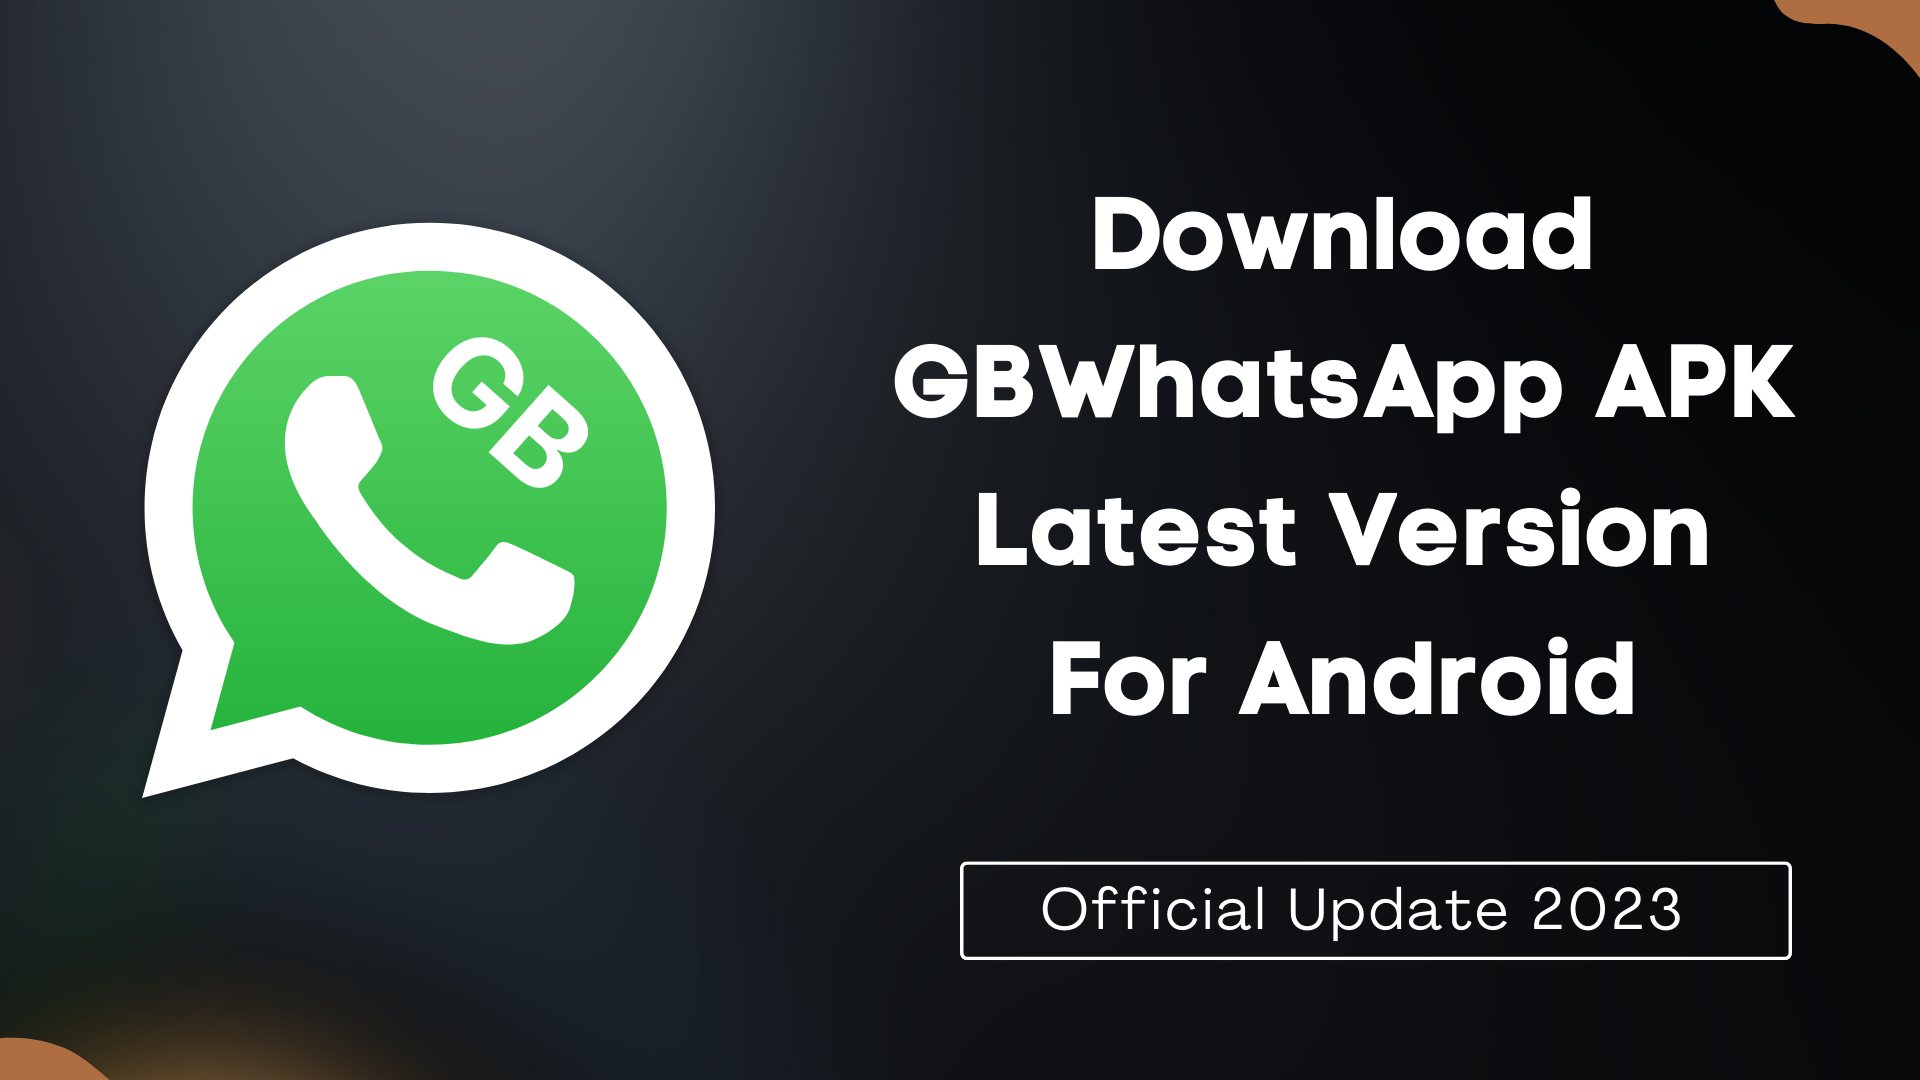 GB WhatsApp APK Featured Image